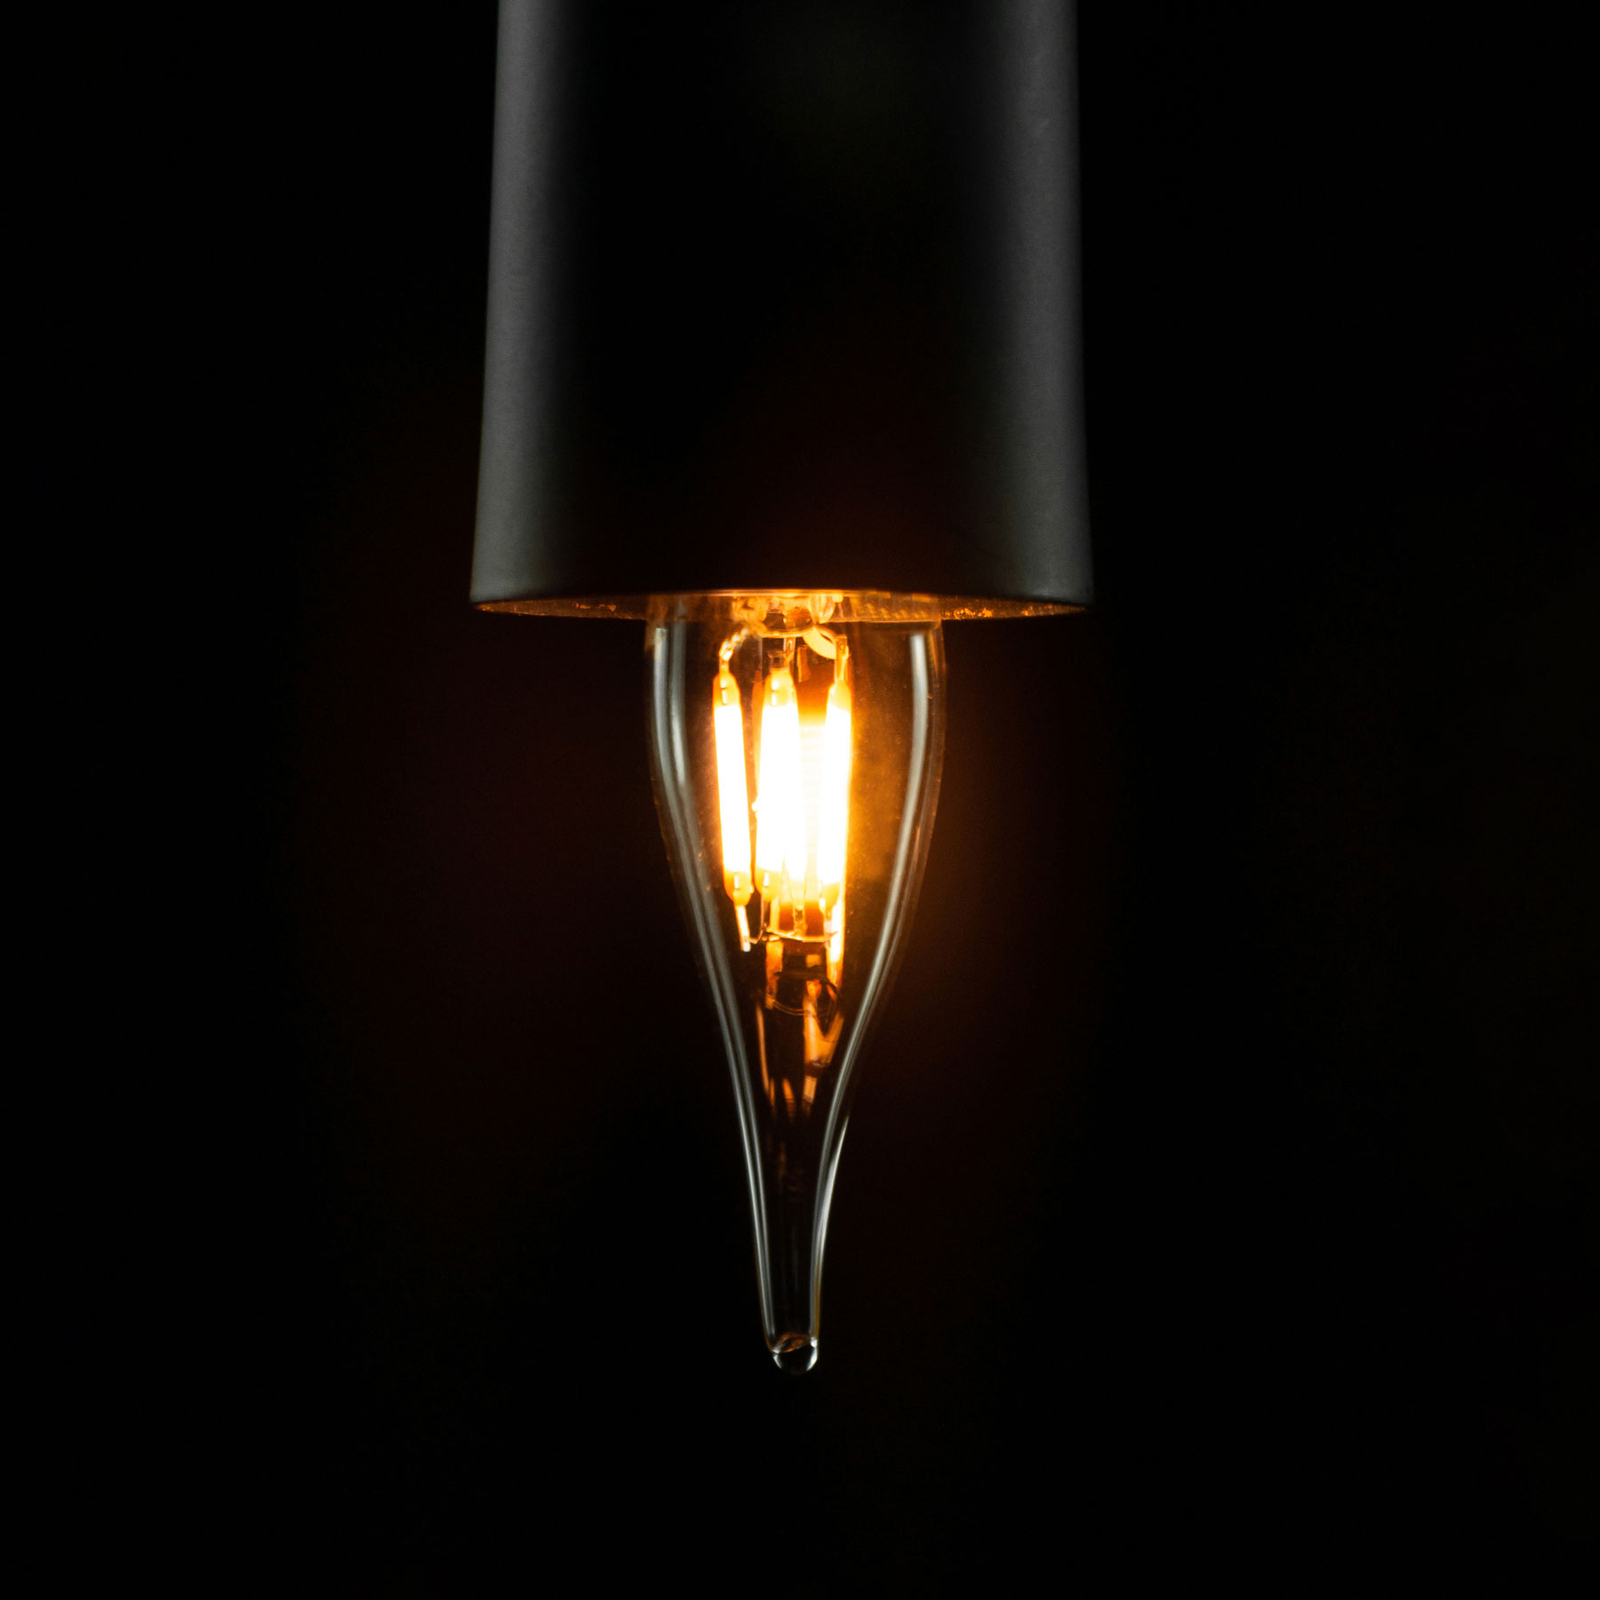 SEGULA LED лампа за свещи Френска свещ E14 2W прозрачна